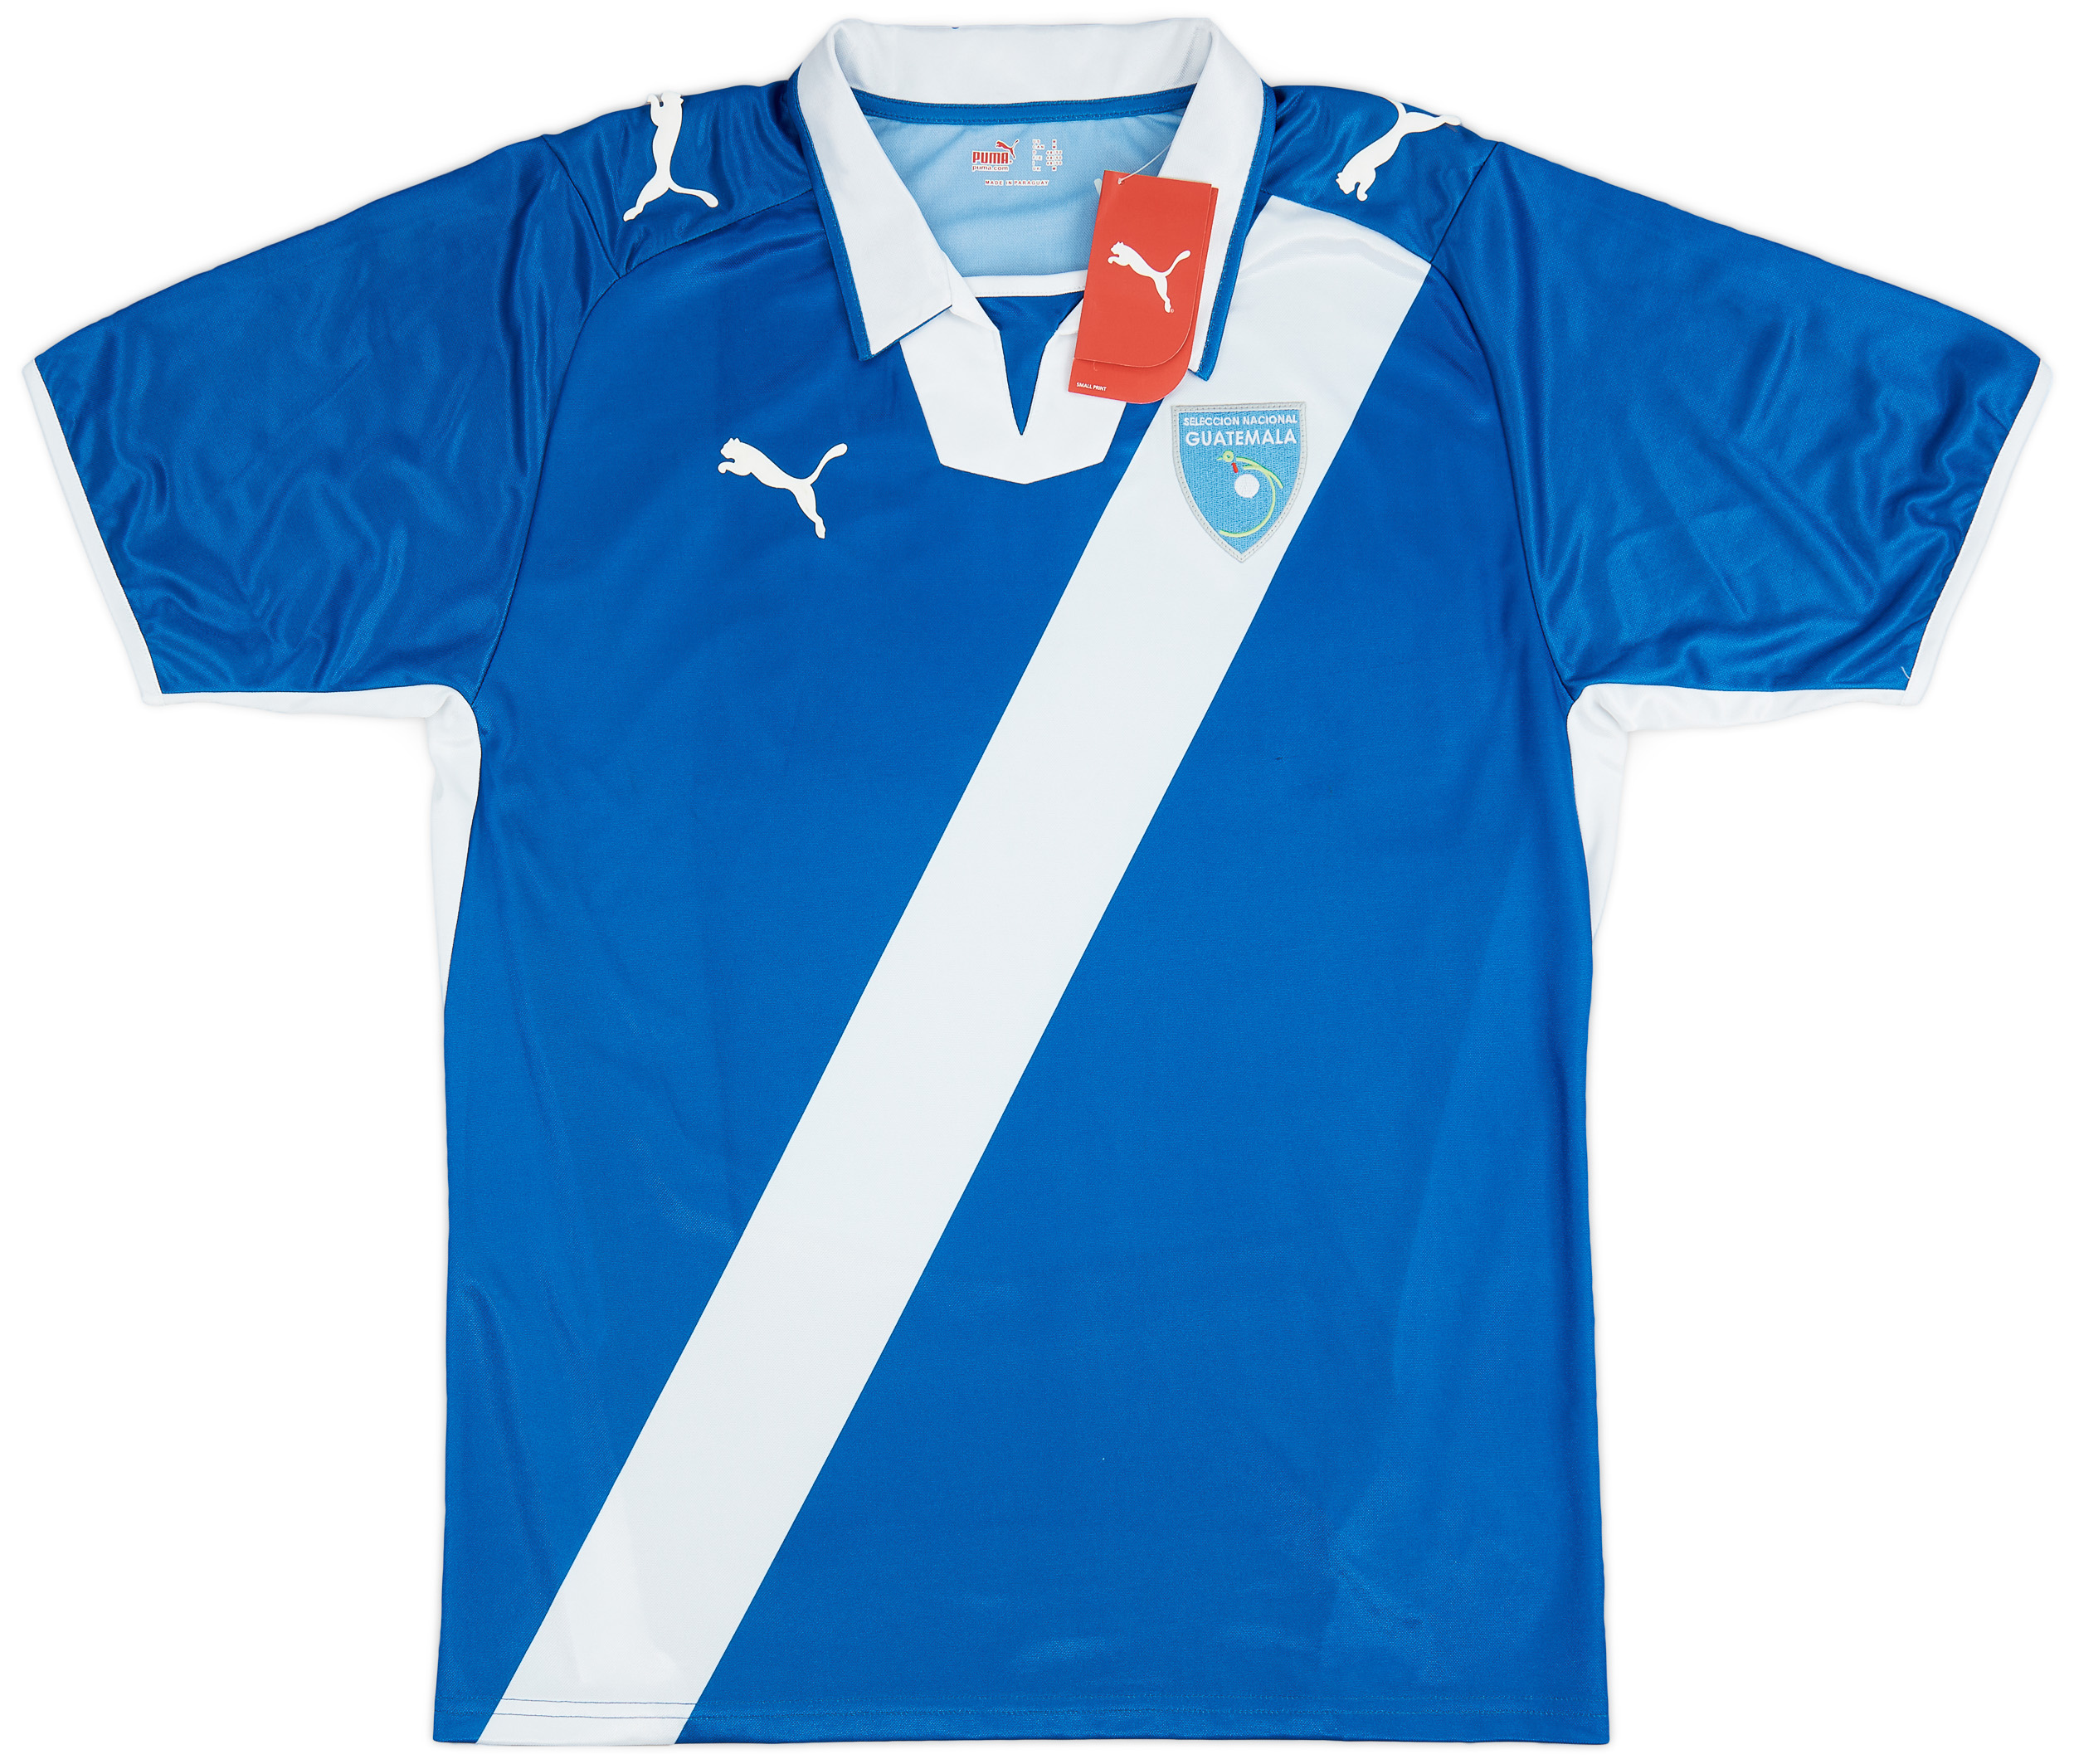 Guatemala  Fora camisa (Original)